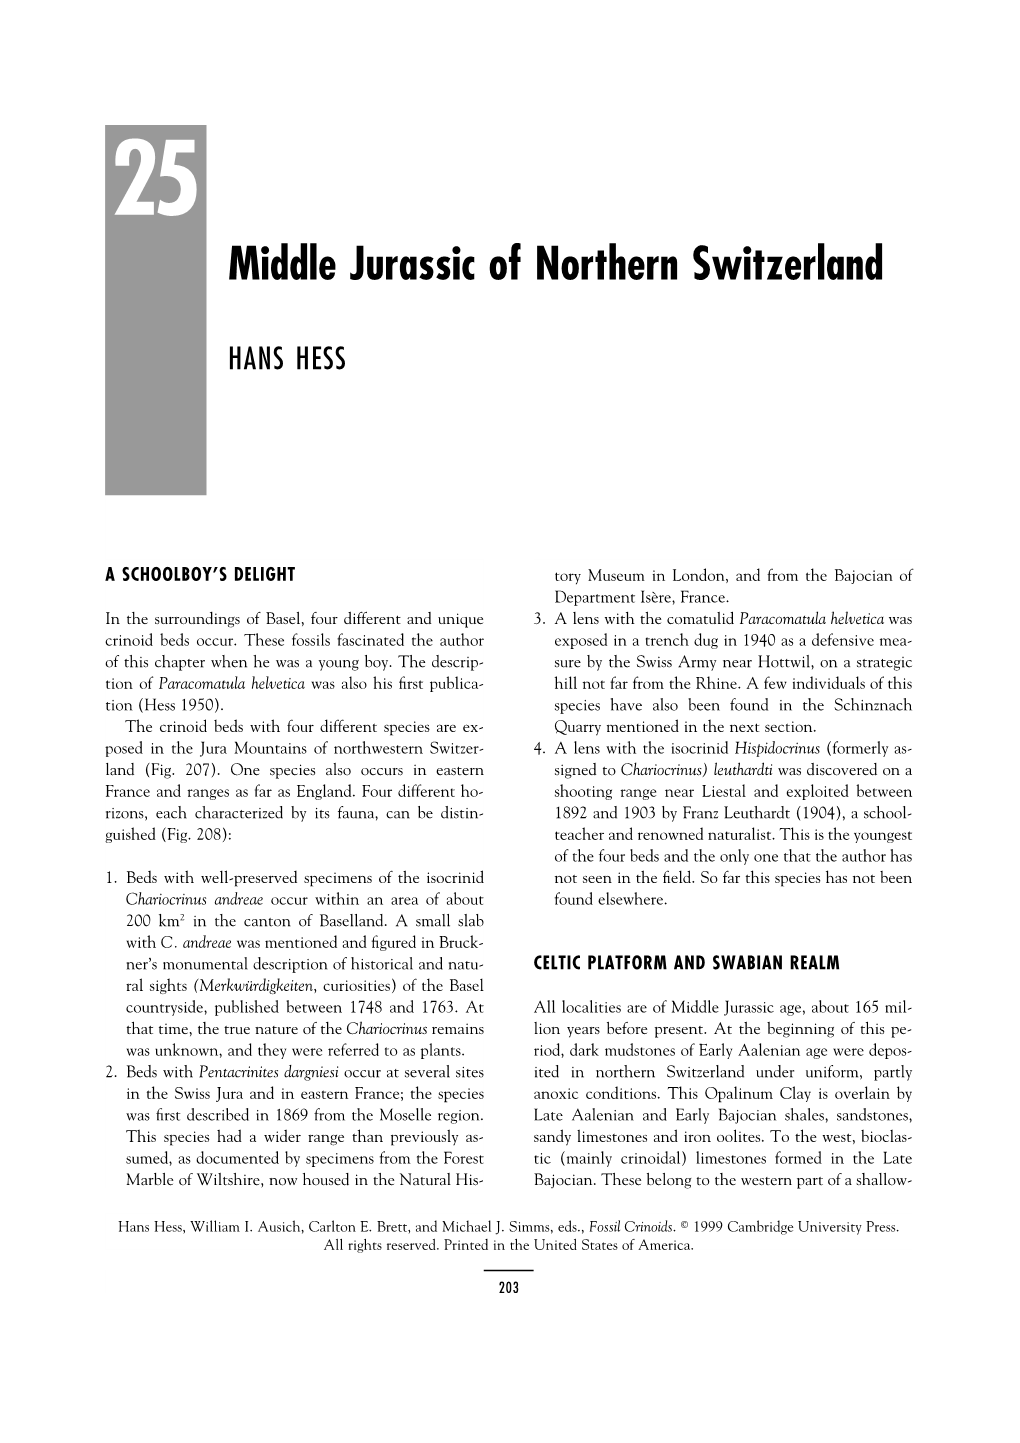 Middle Jurassic of Northern Switzerland